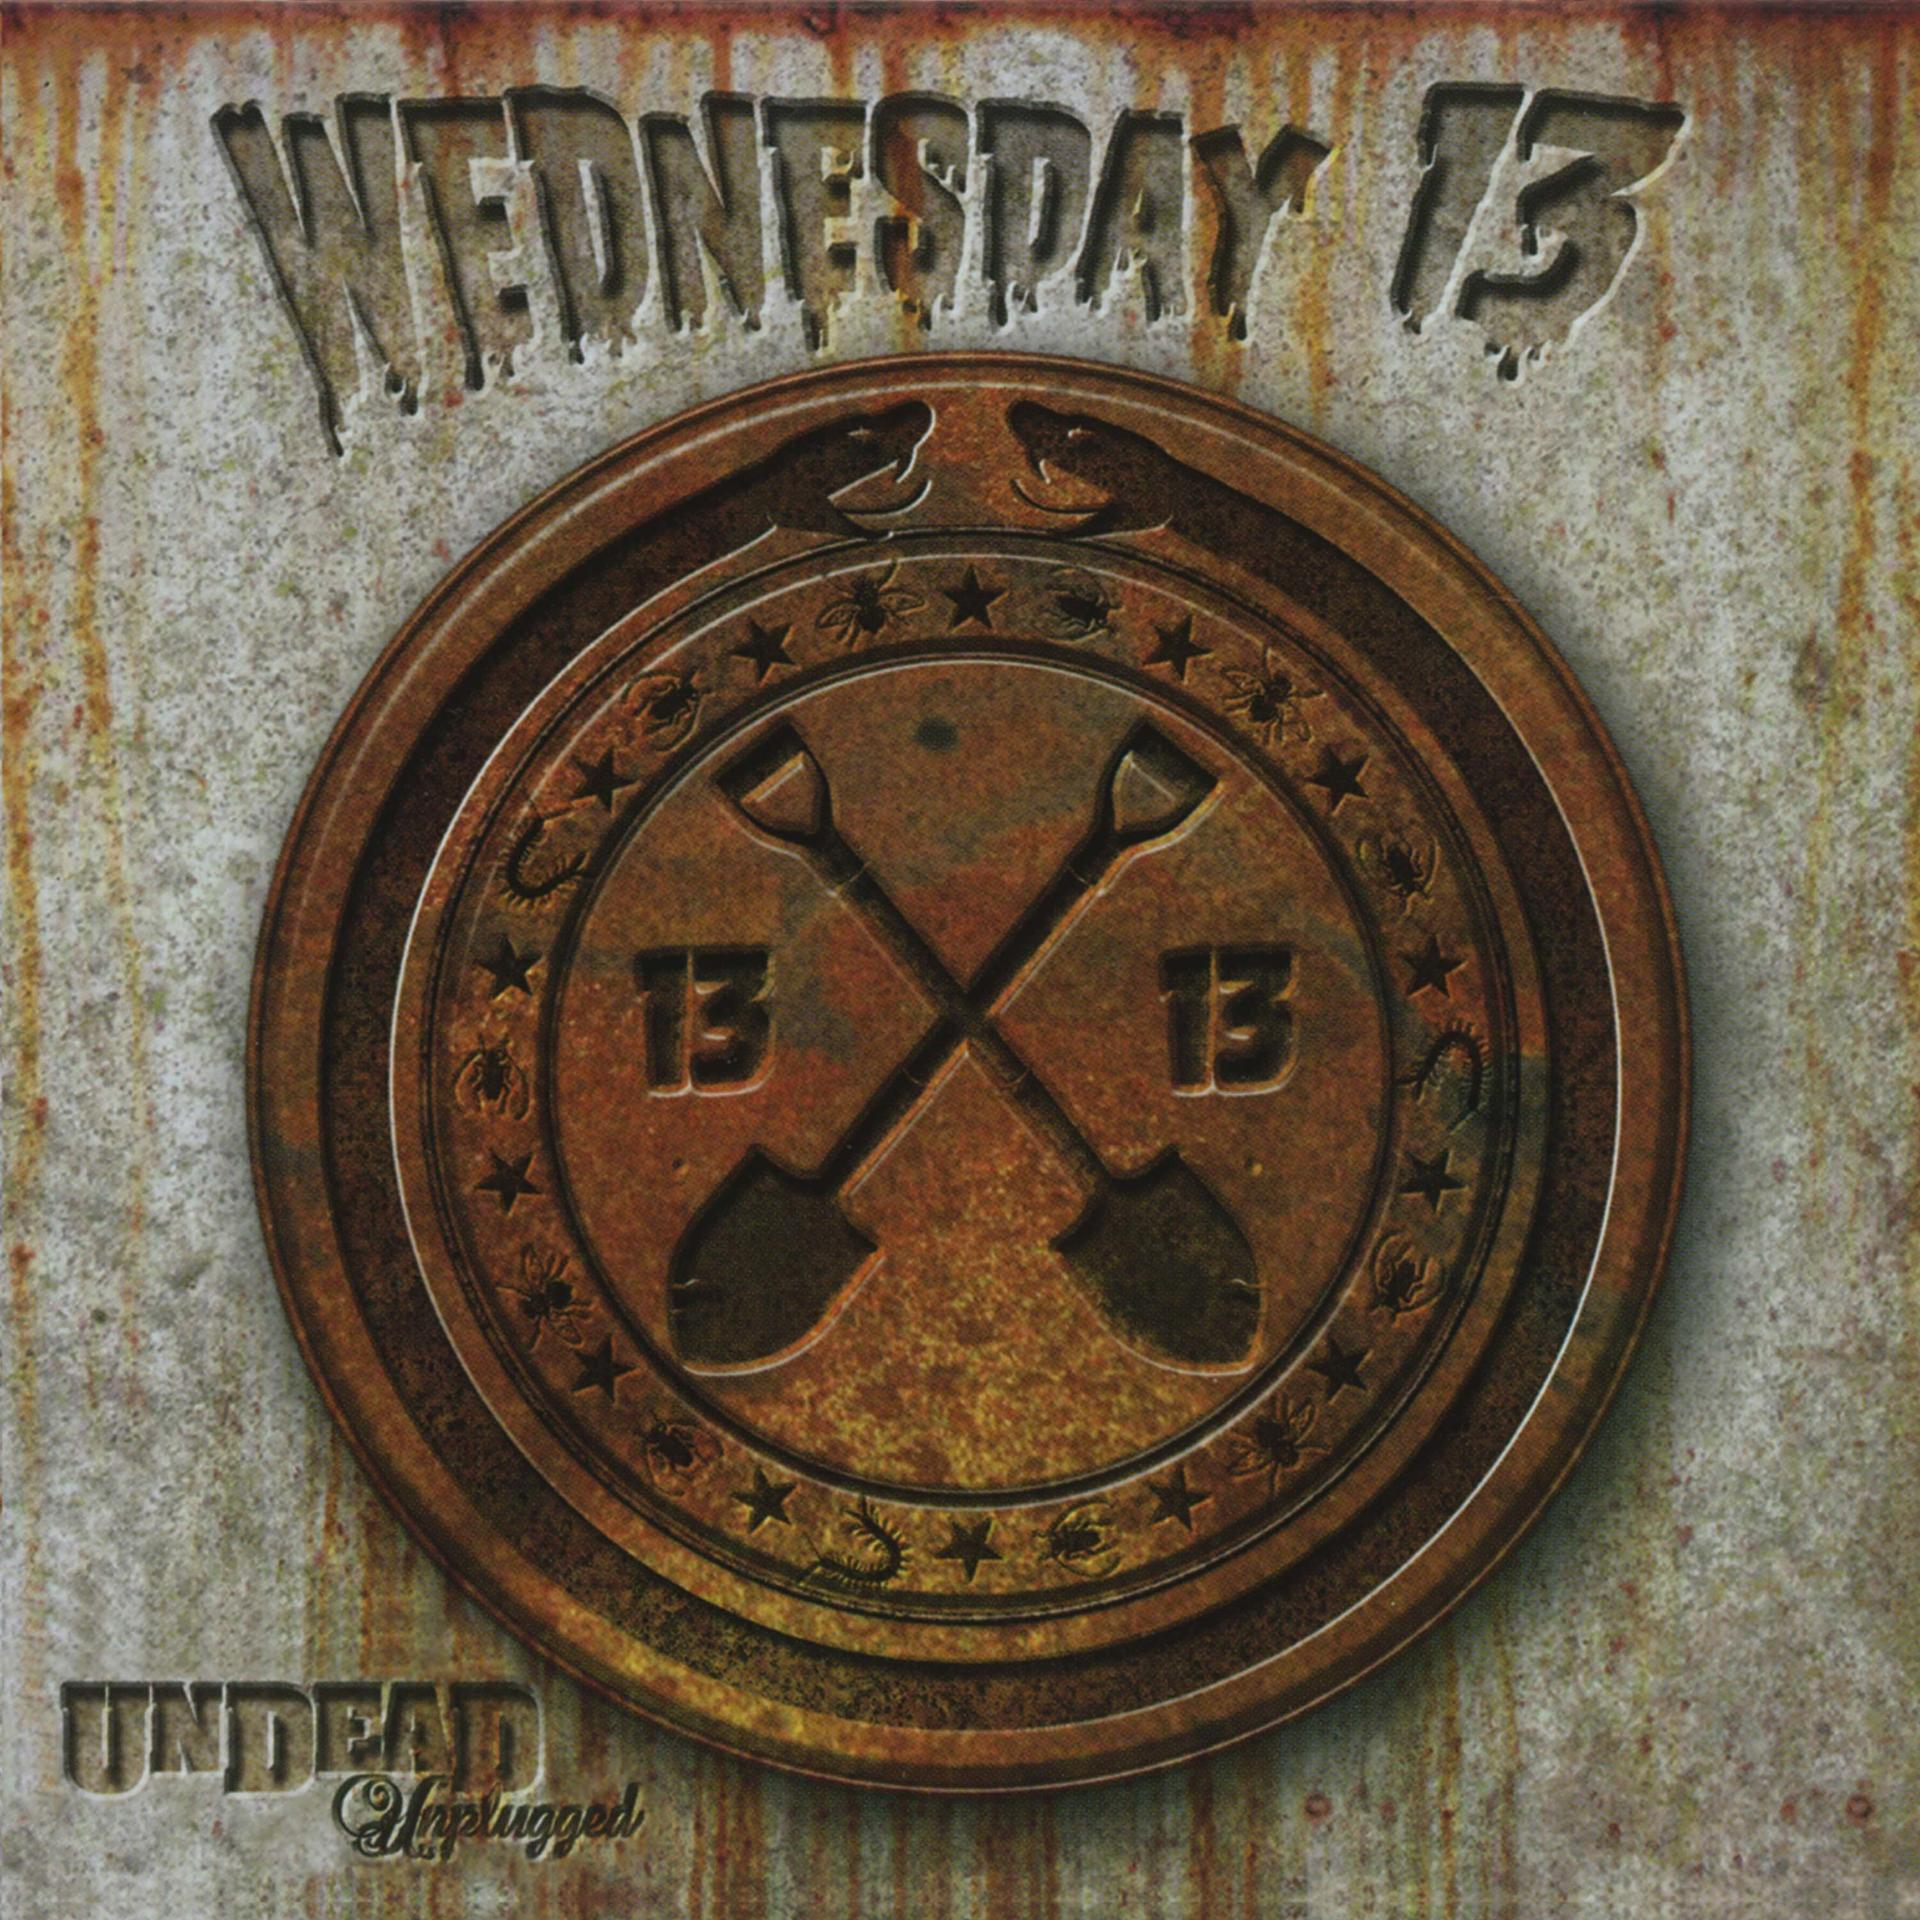 Wednesday 13 - Undead Unplugged - (Vinyl)